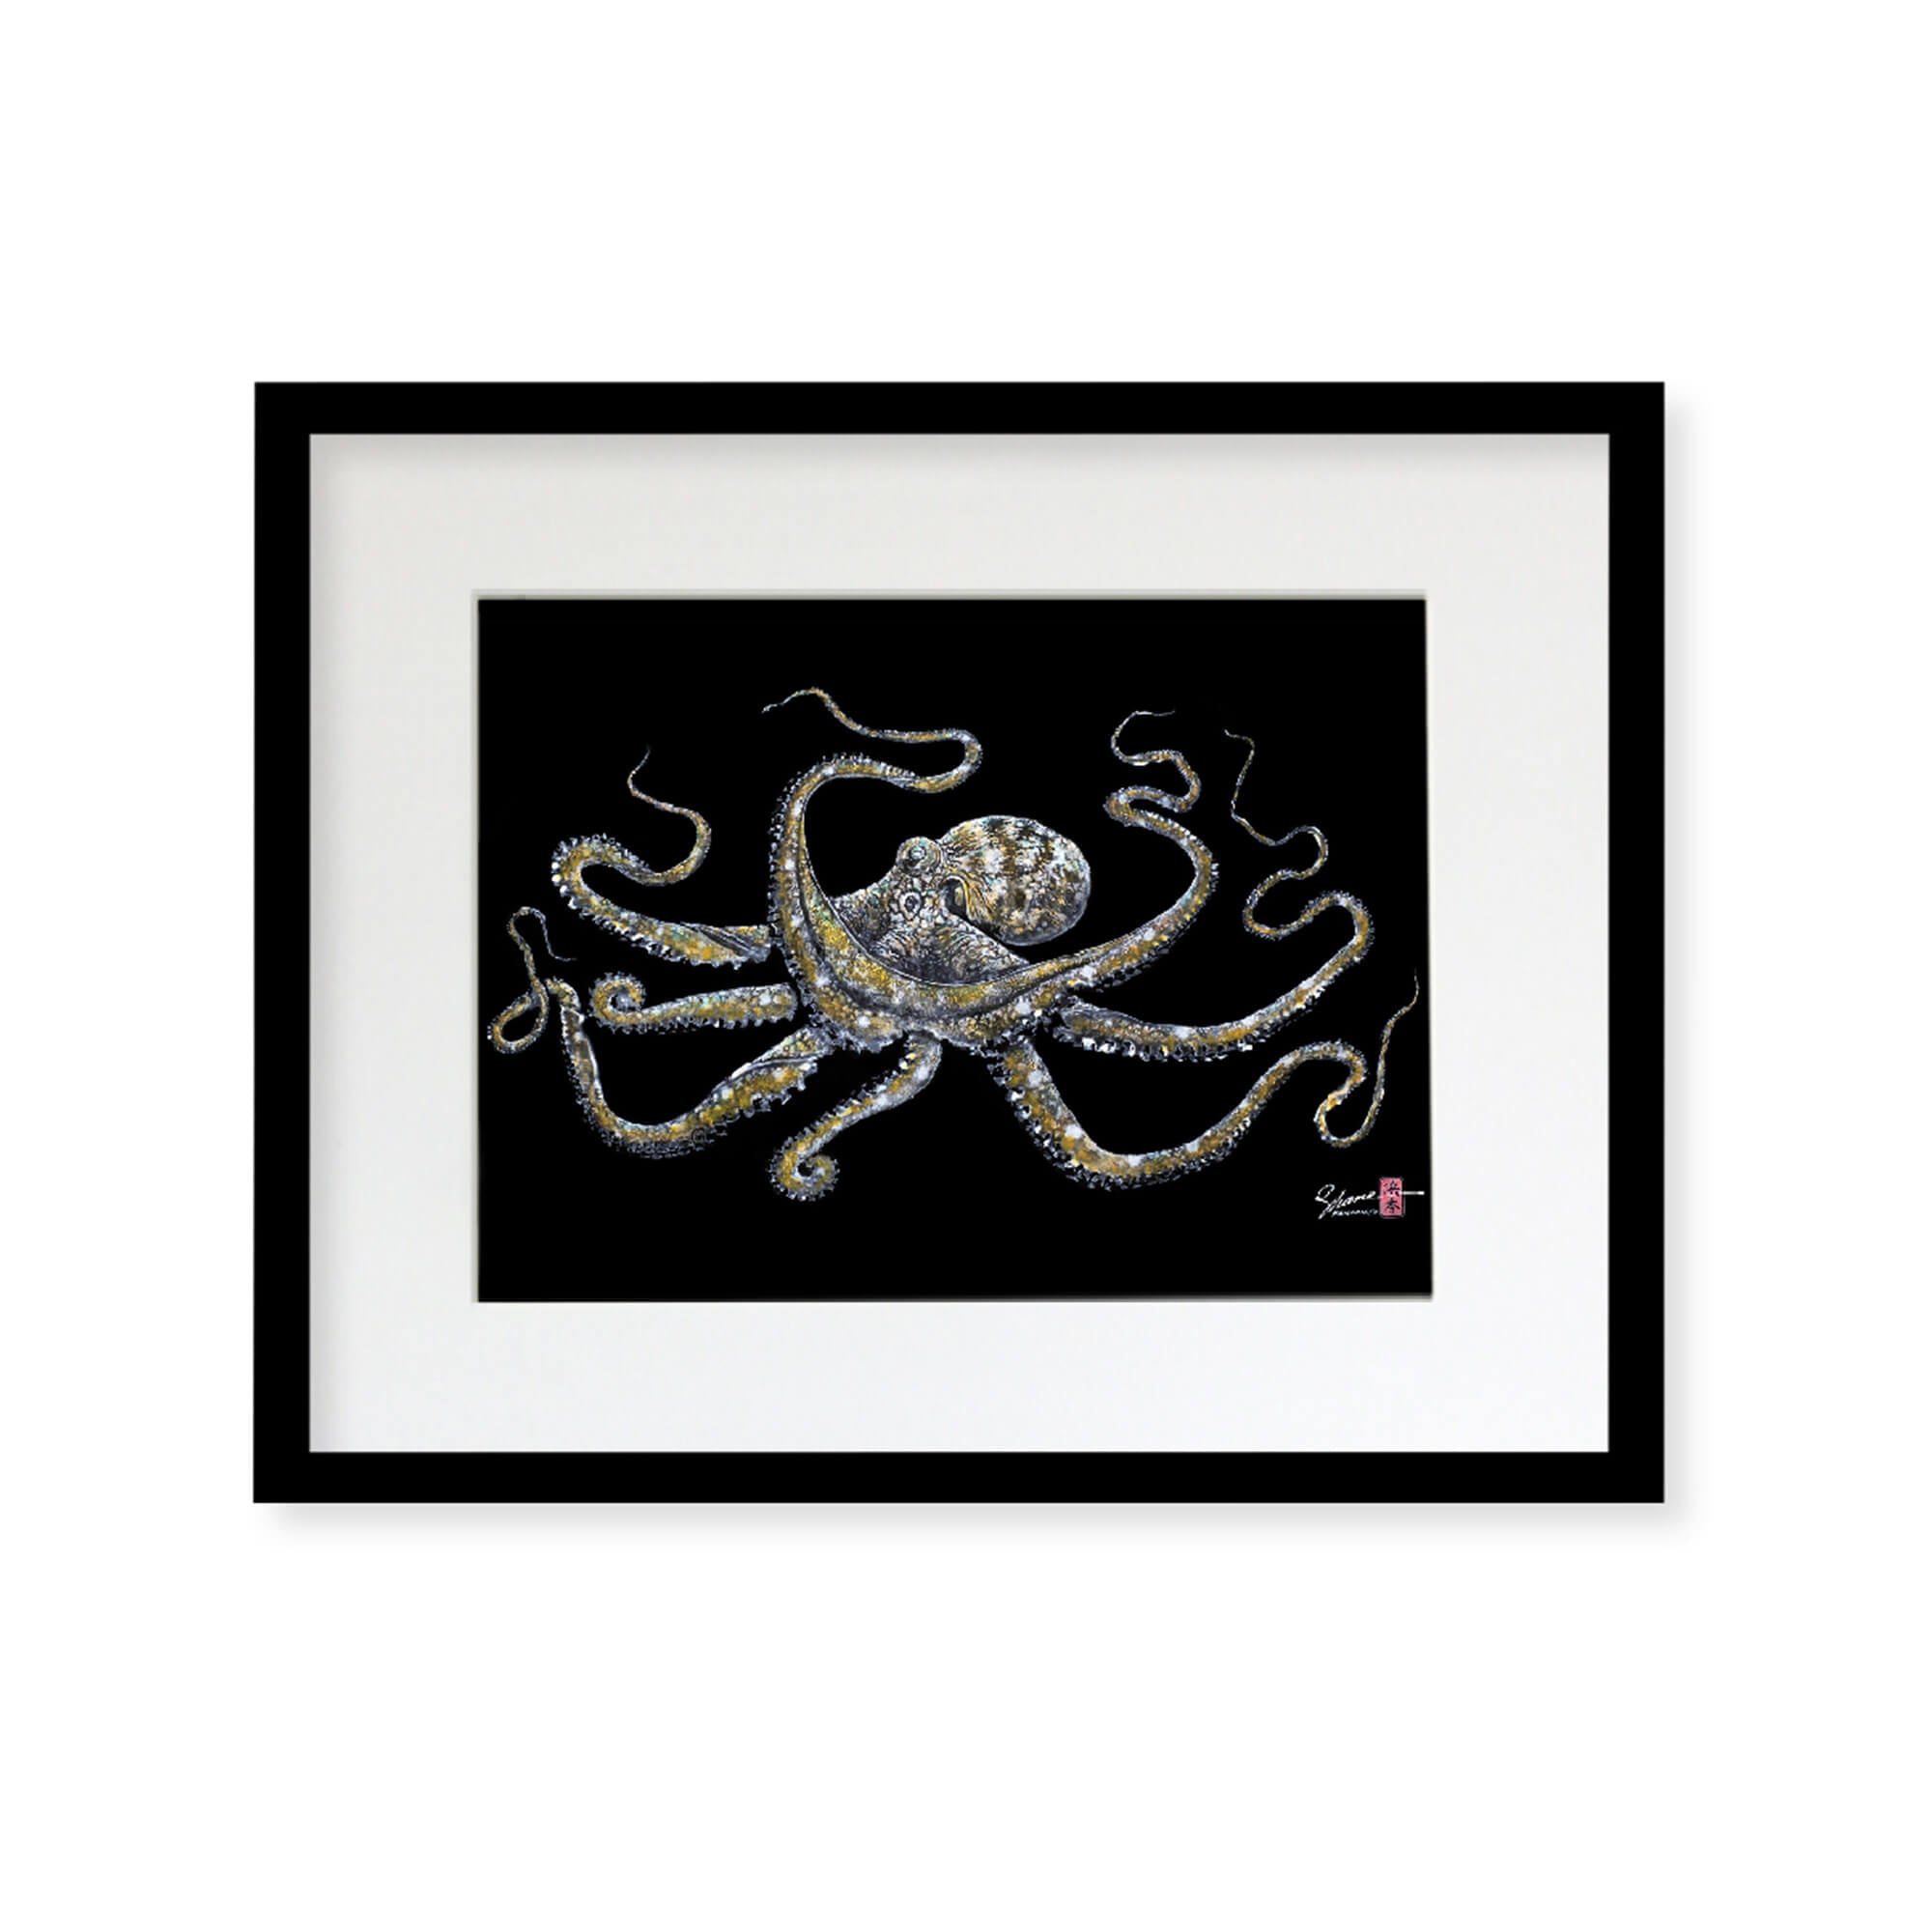 Framed matted print of Tako (octopus) by Hawaii gyotaku artist Shane Hamamoto